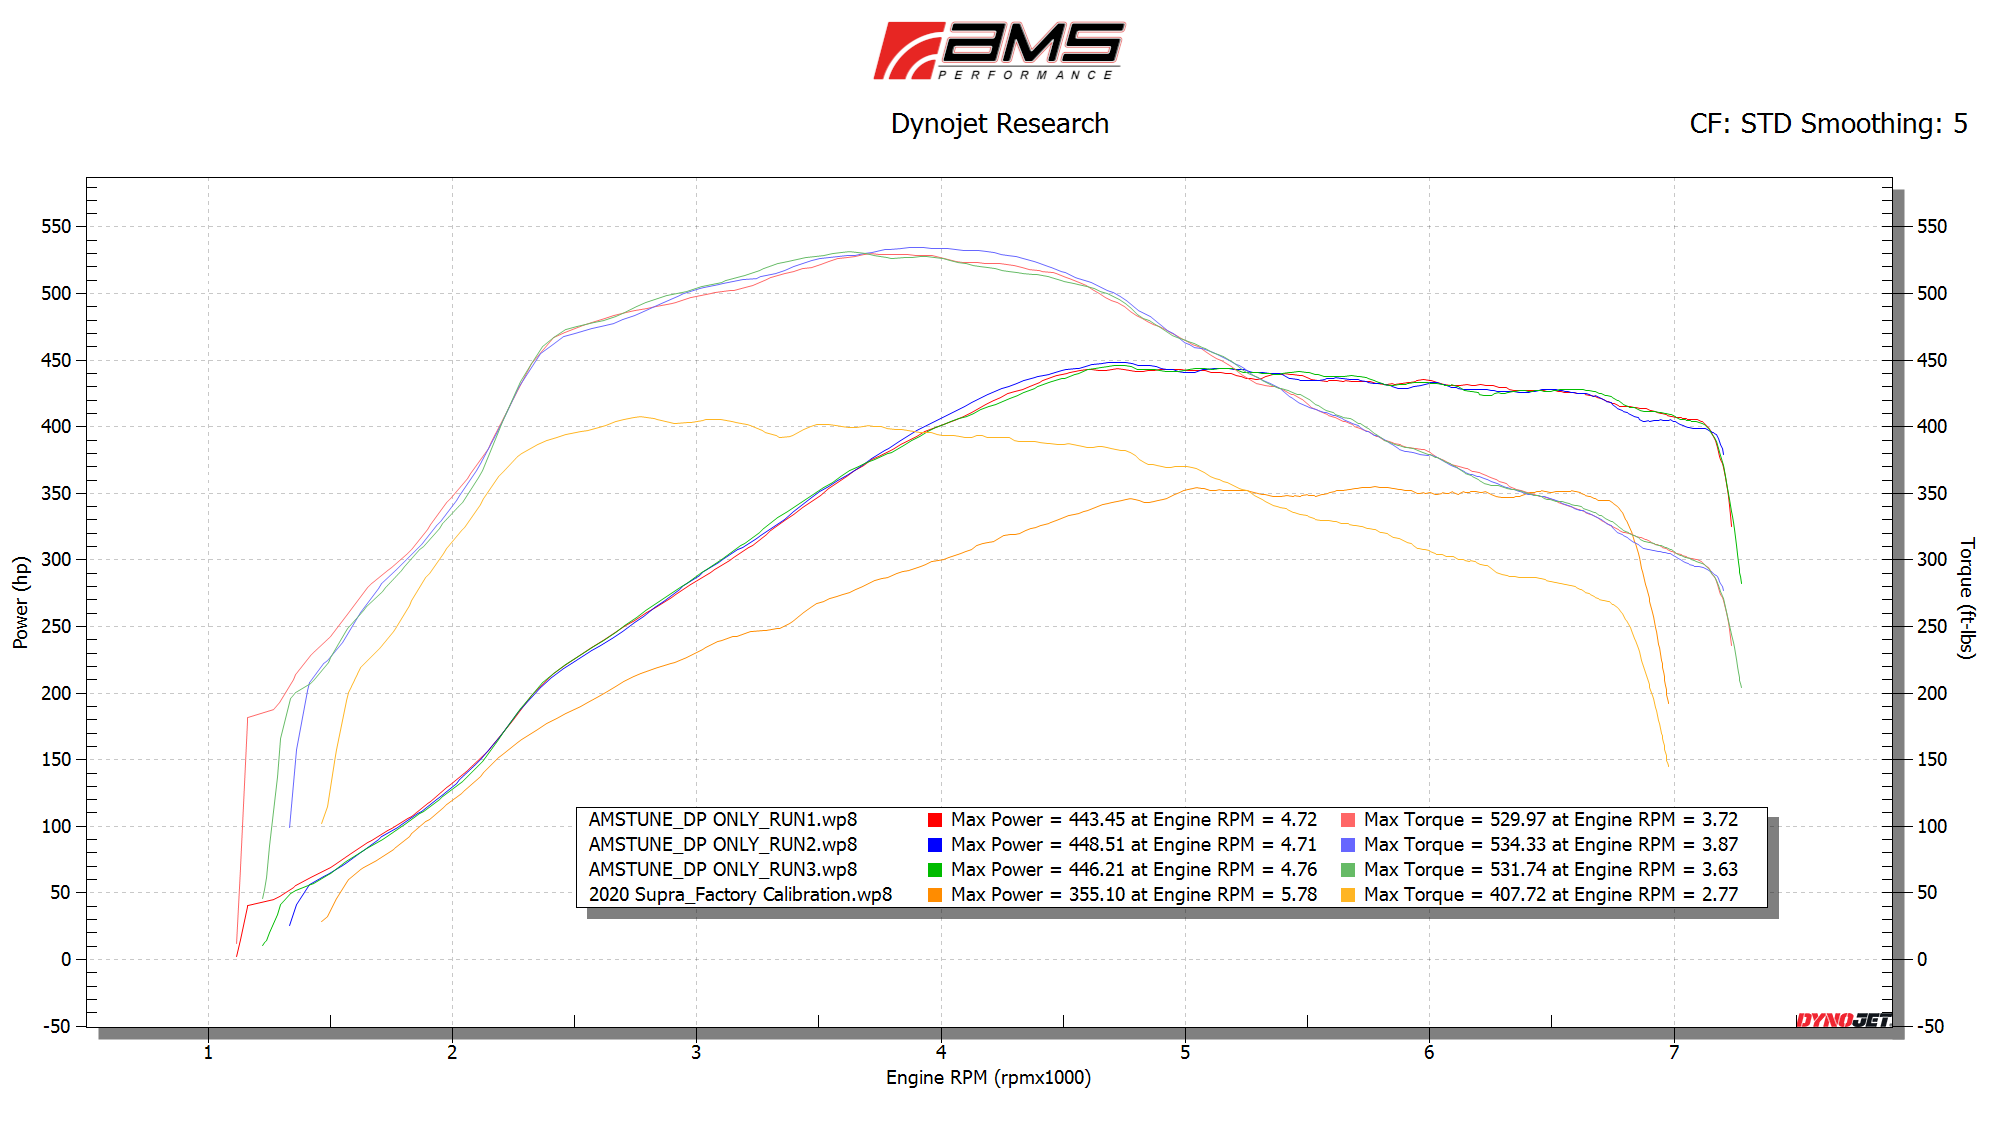 AMS Performance Toyota GR Supra Street Downpipe W/ EPA-Verified Ultra High Flow GESI Catalytic Converter